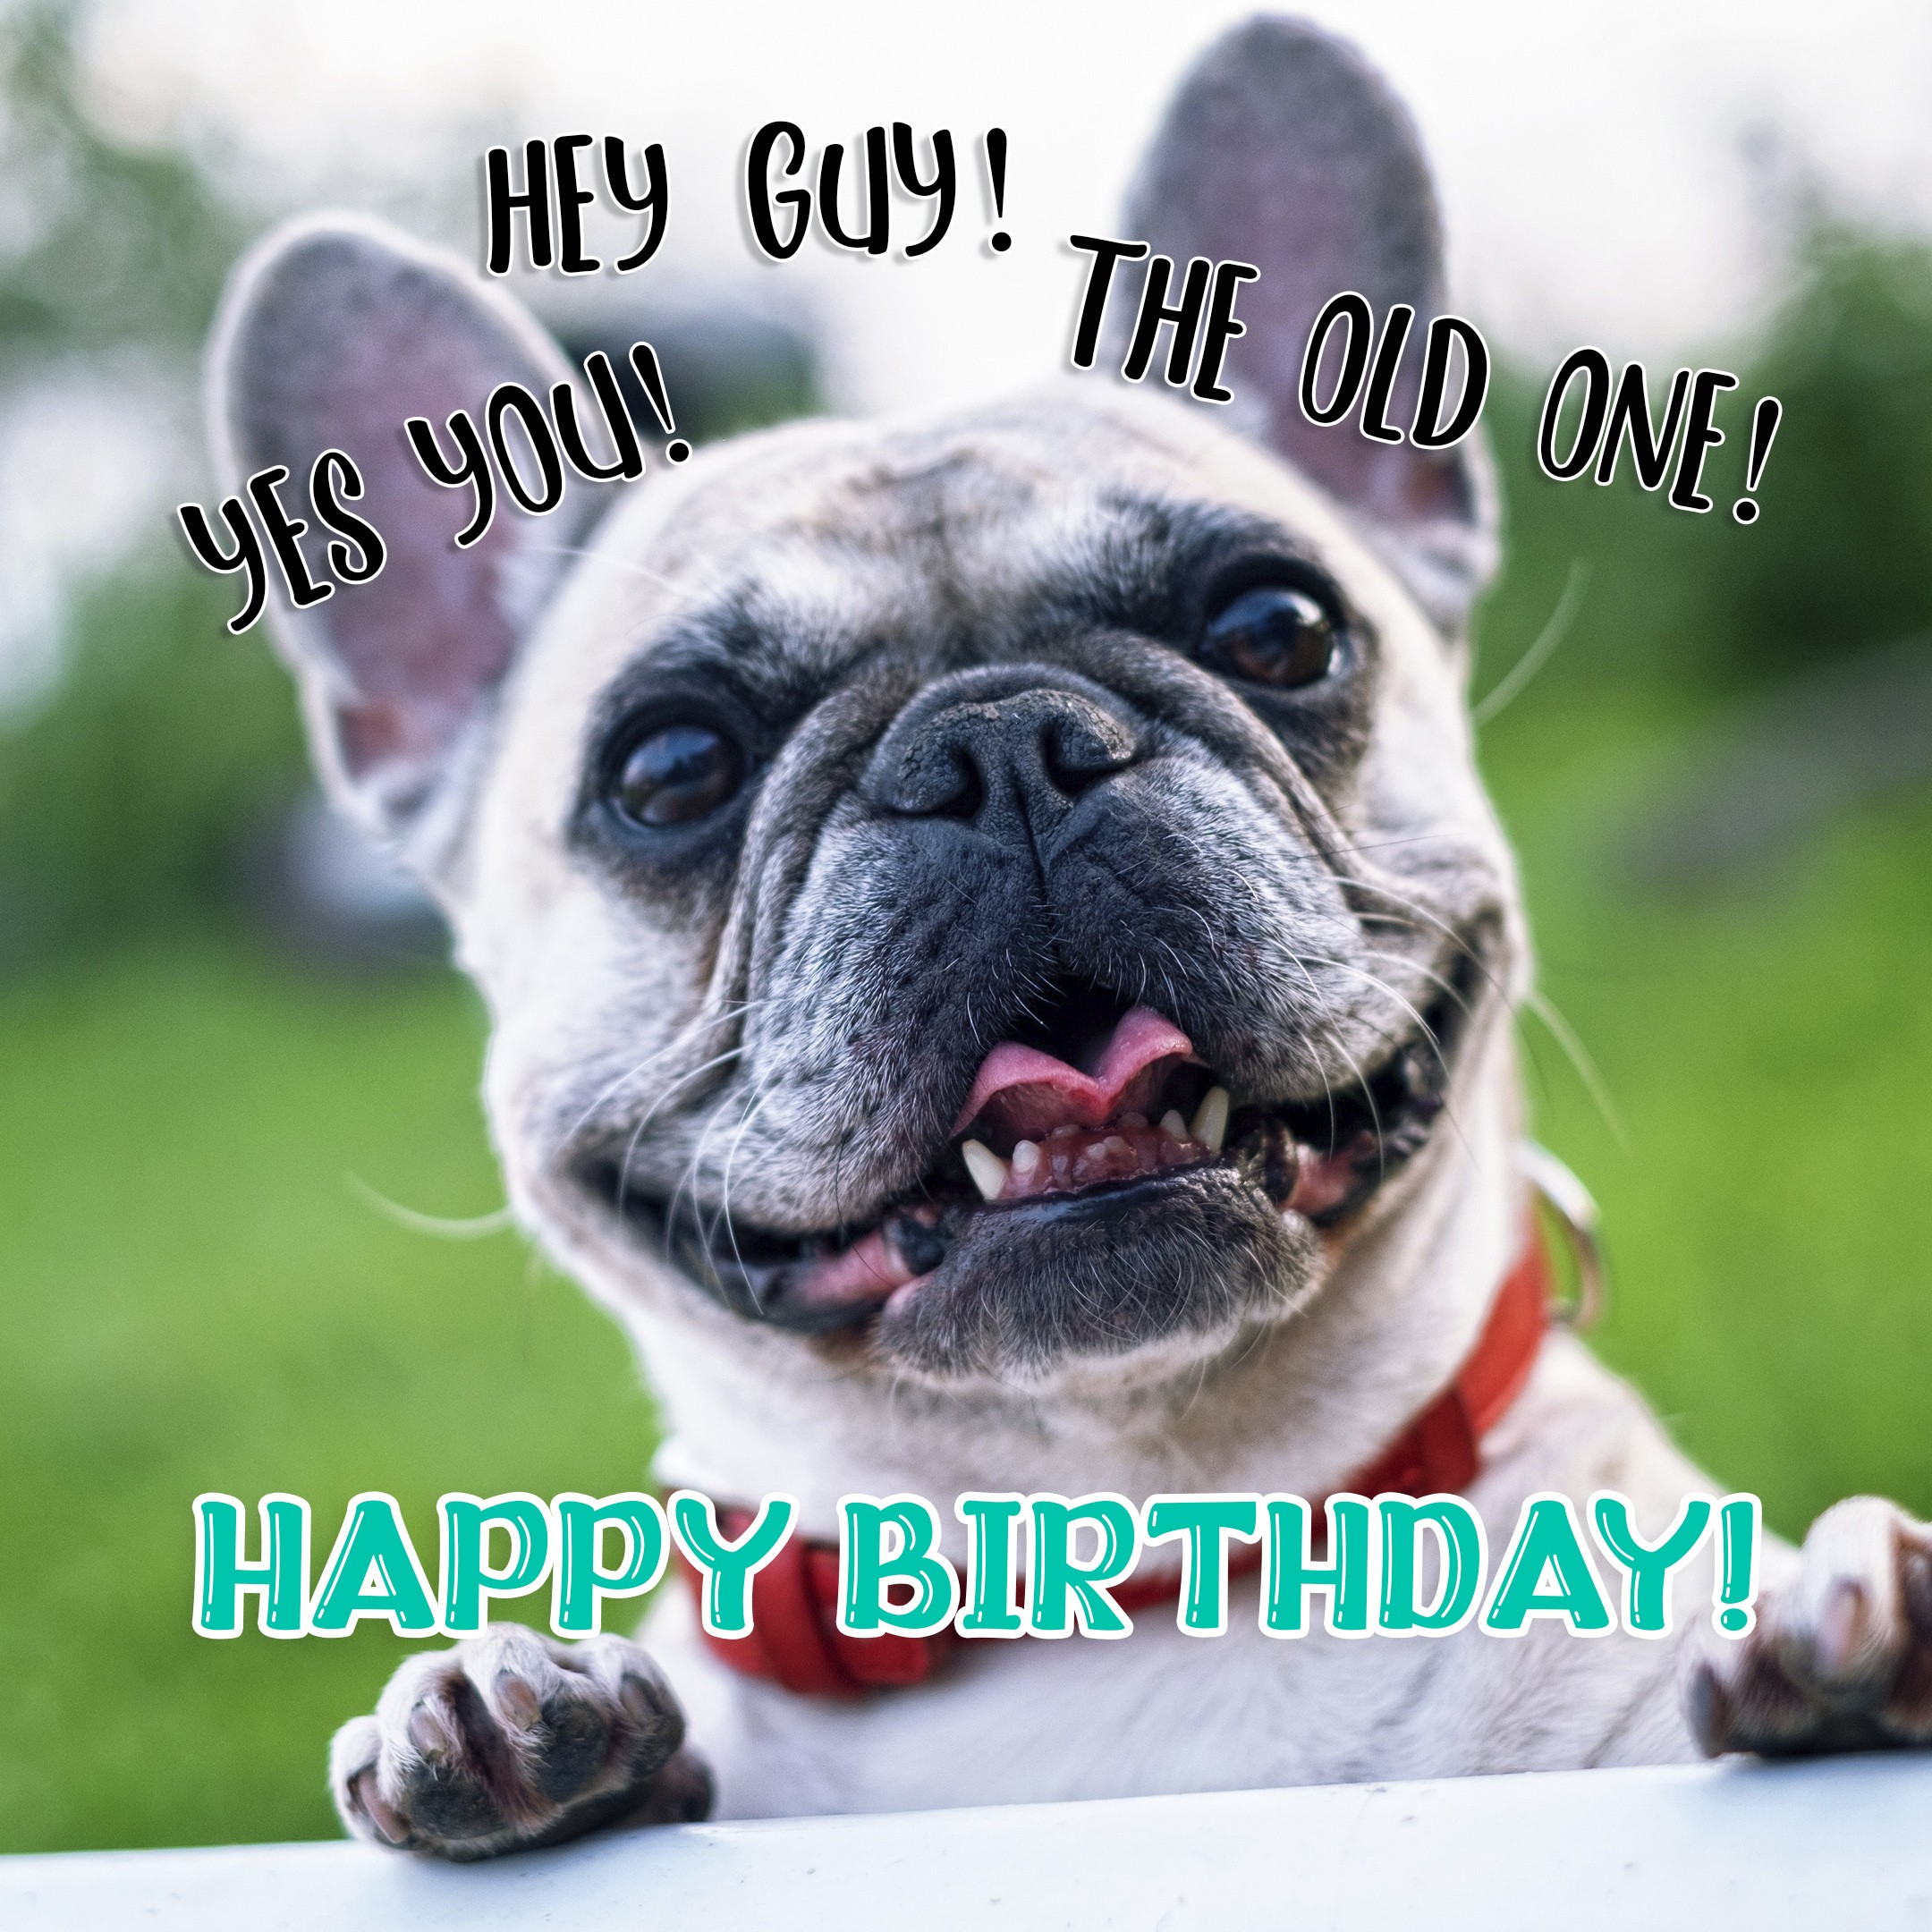 Free Funny Happy Birthday Image With Dog - birthdayimg.com